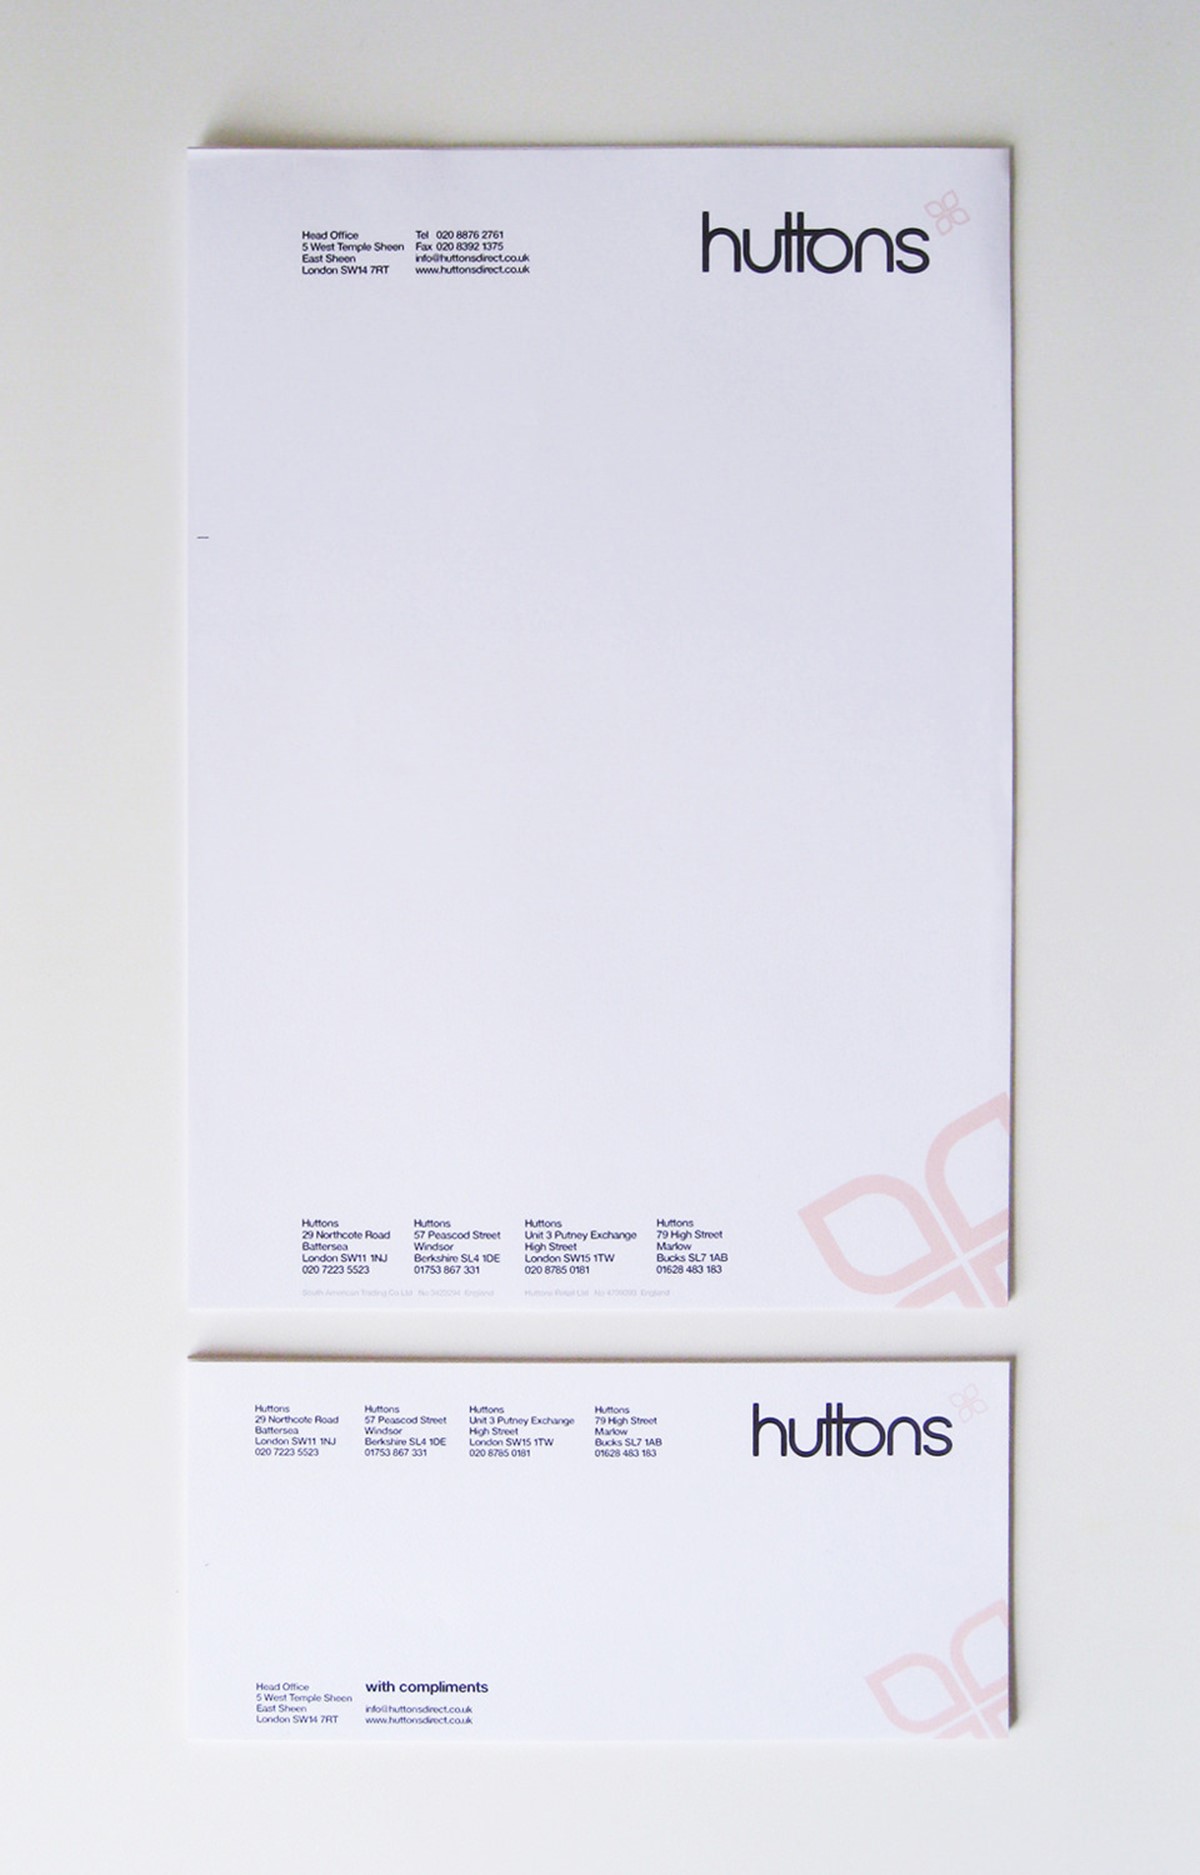 Huttons. Retail brand identity – letterhead + comp slip. Brand identity design by Superfried.